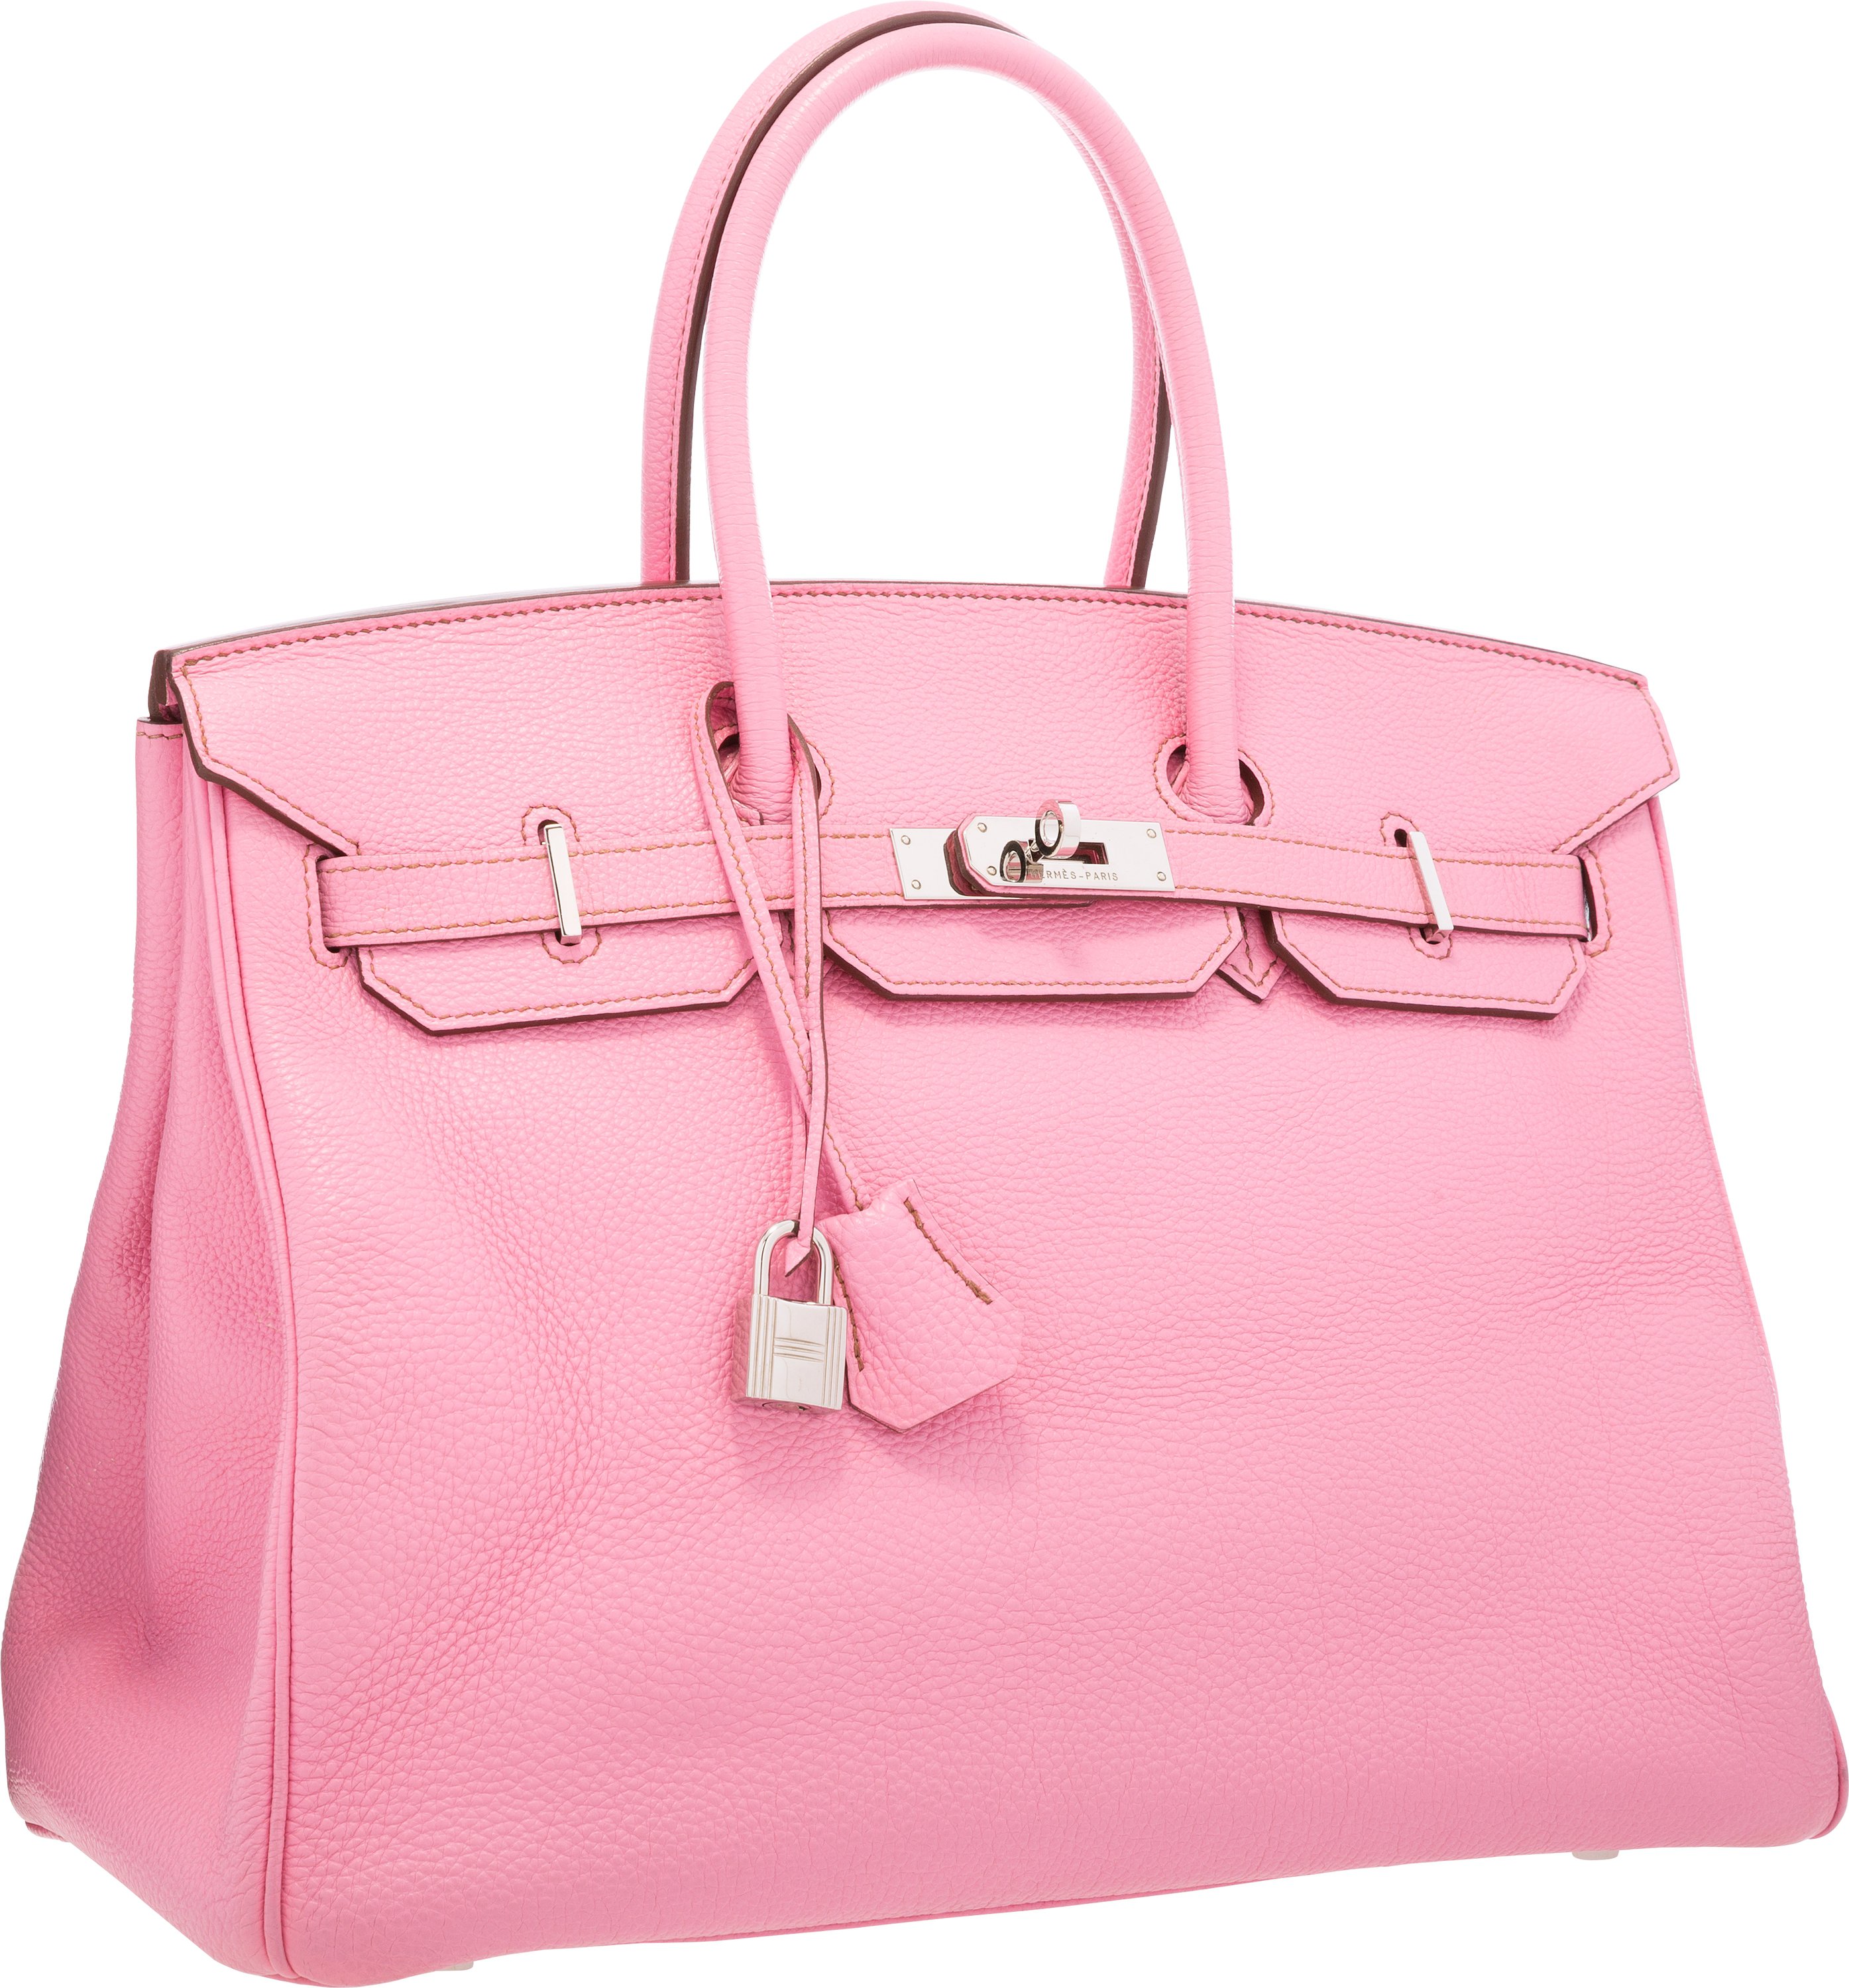 Hermes 35cm 5P Pink Togo Leather Birkin Bag with Palladium | Lot #58006 ...